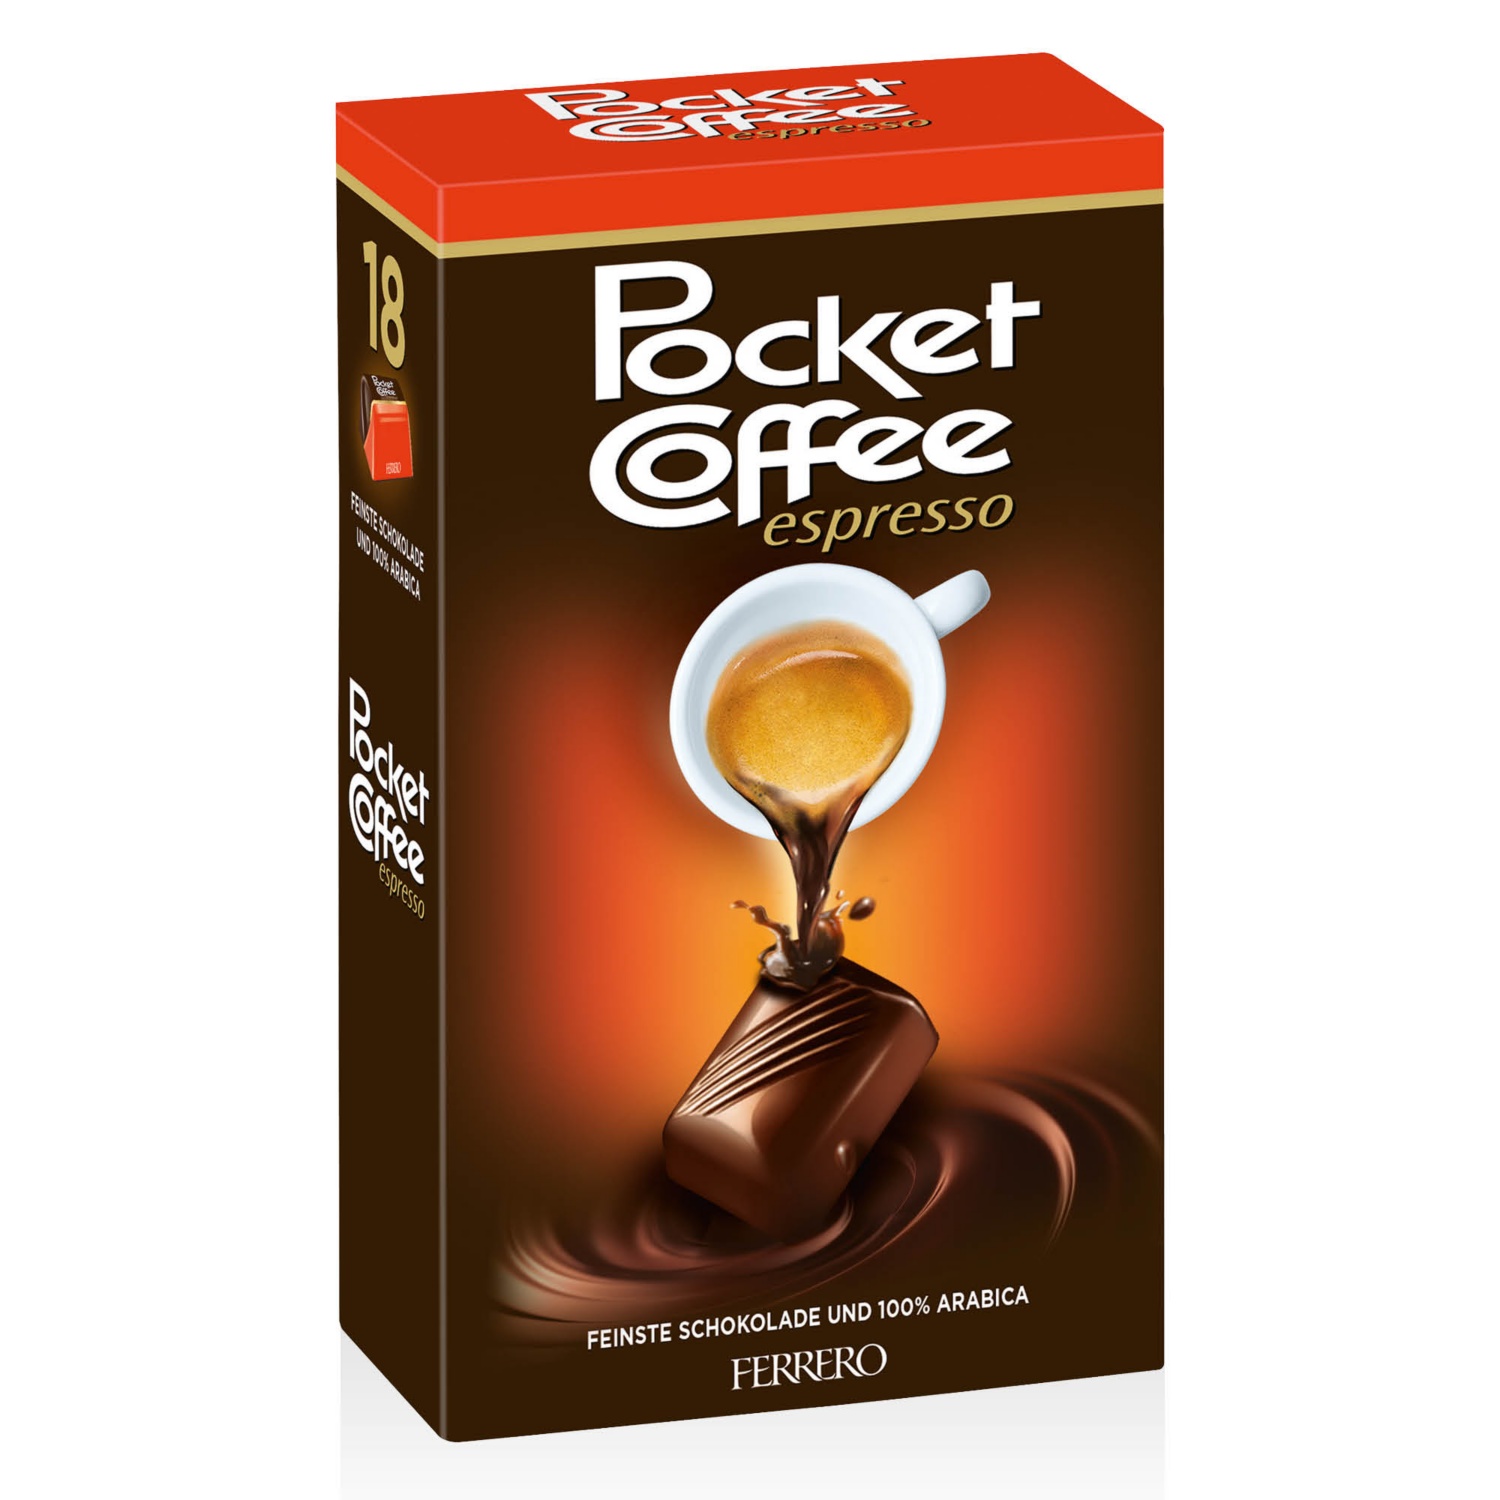 FERRERO Pocket Coffee 225 g